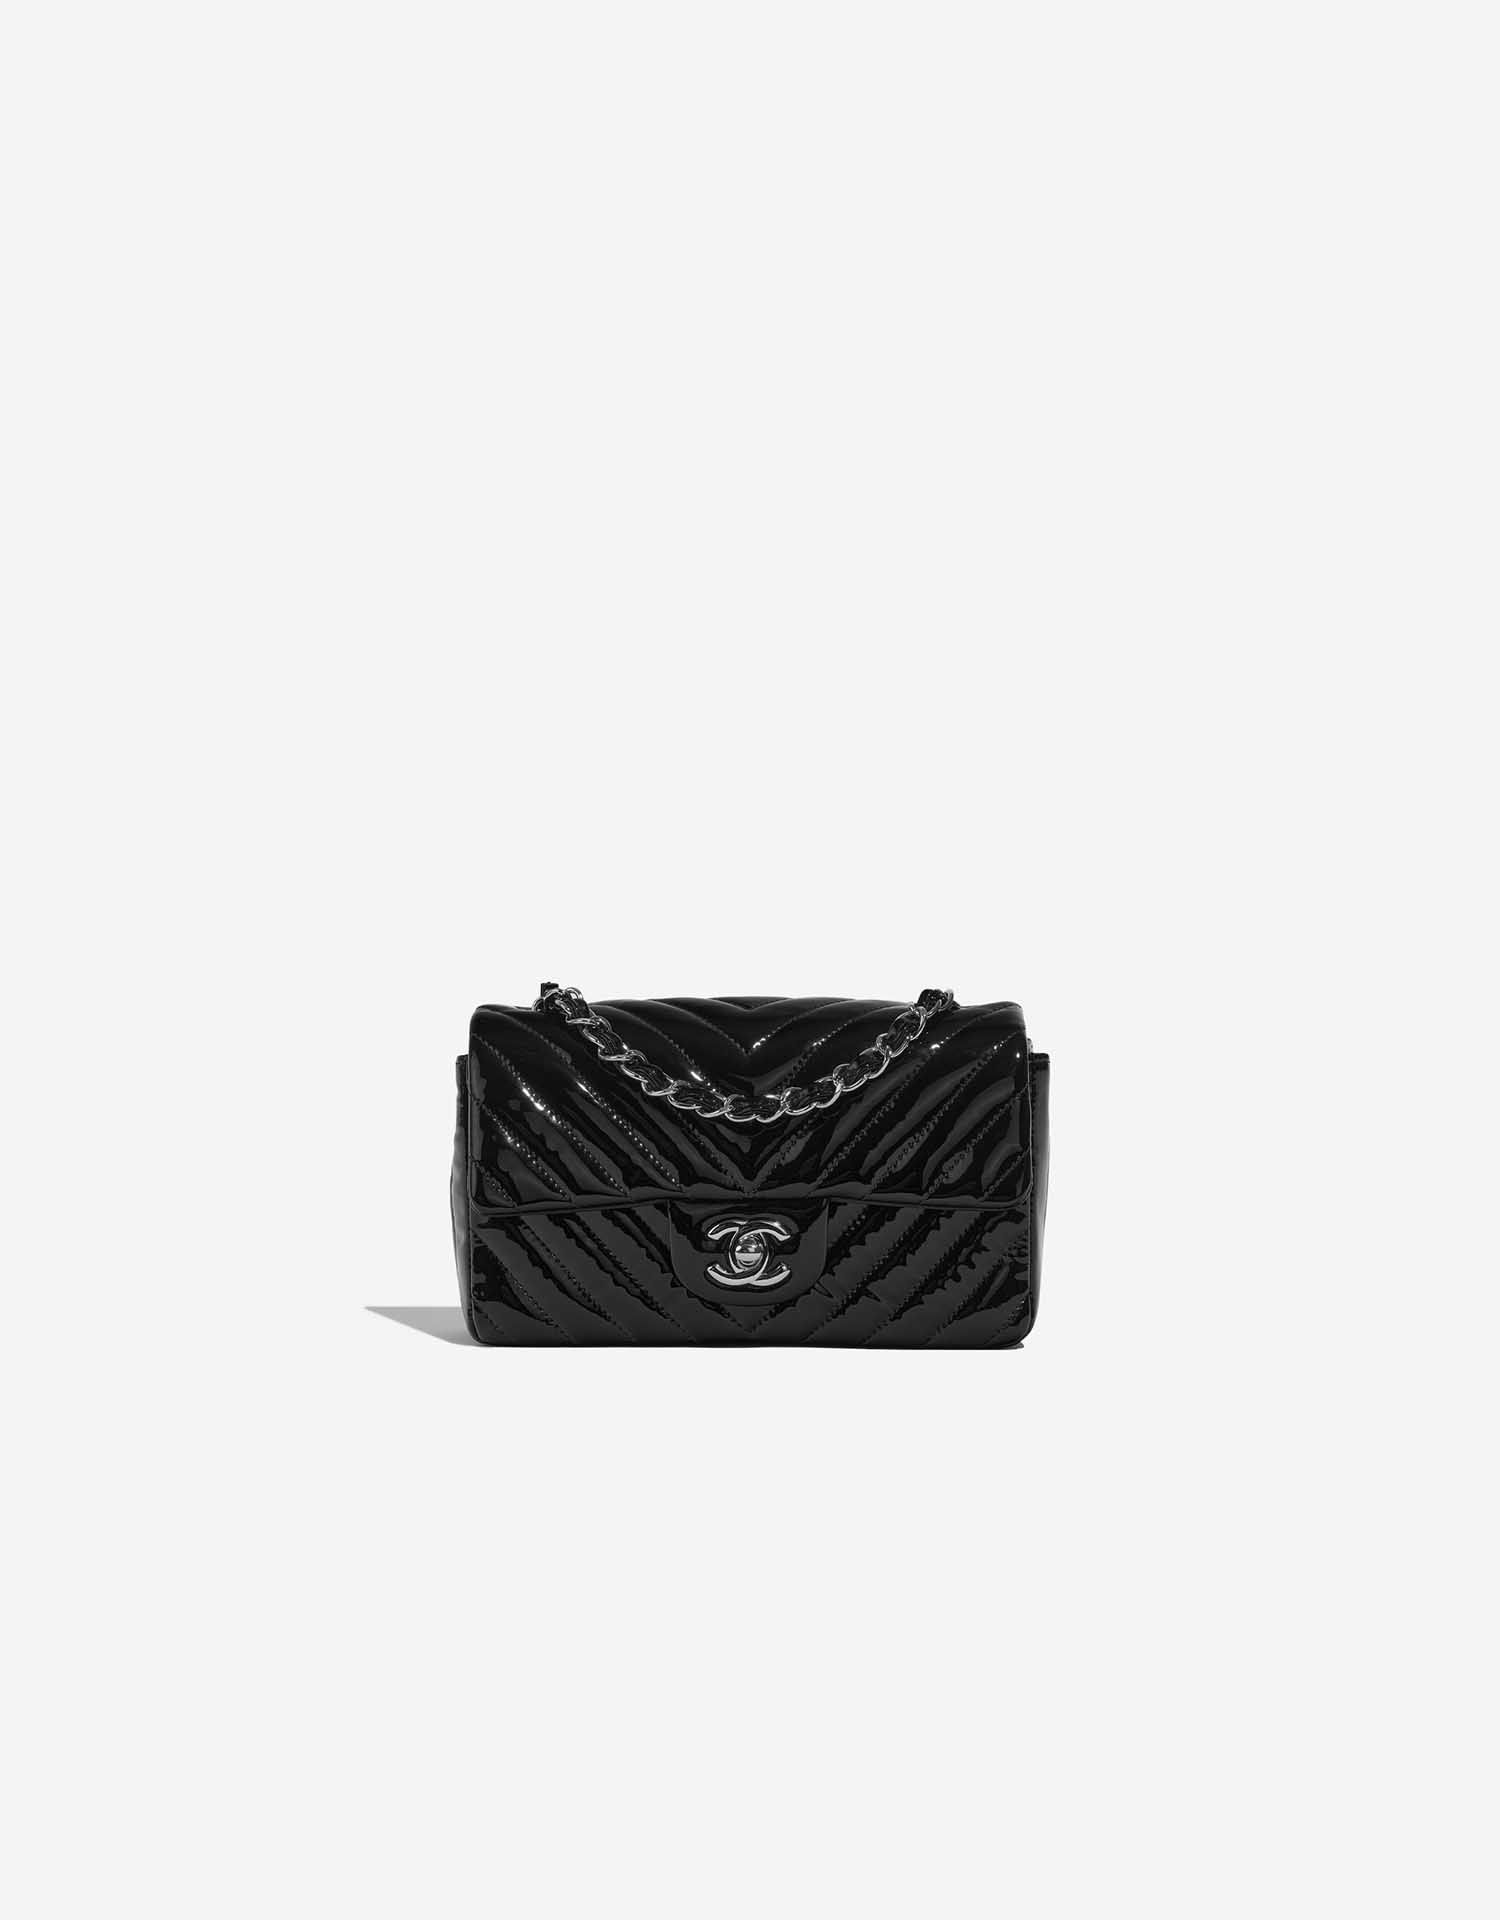 Chanel Timeless Mini Rectangular Patent Leather Black